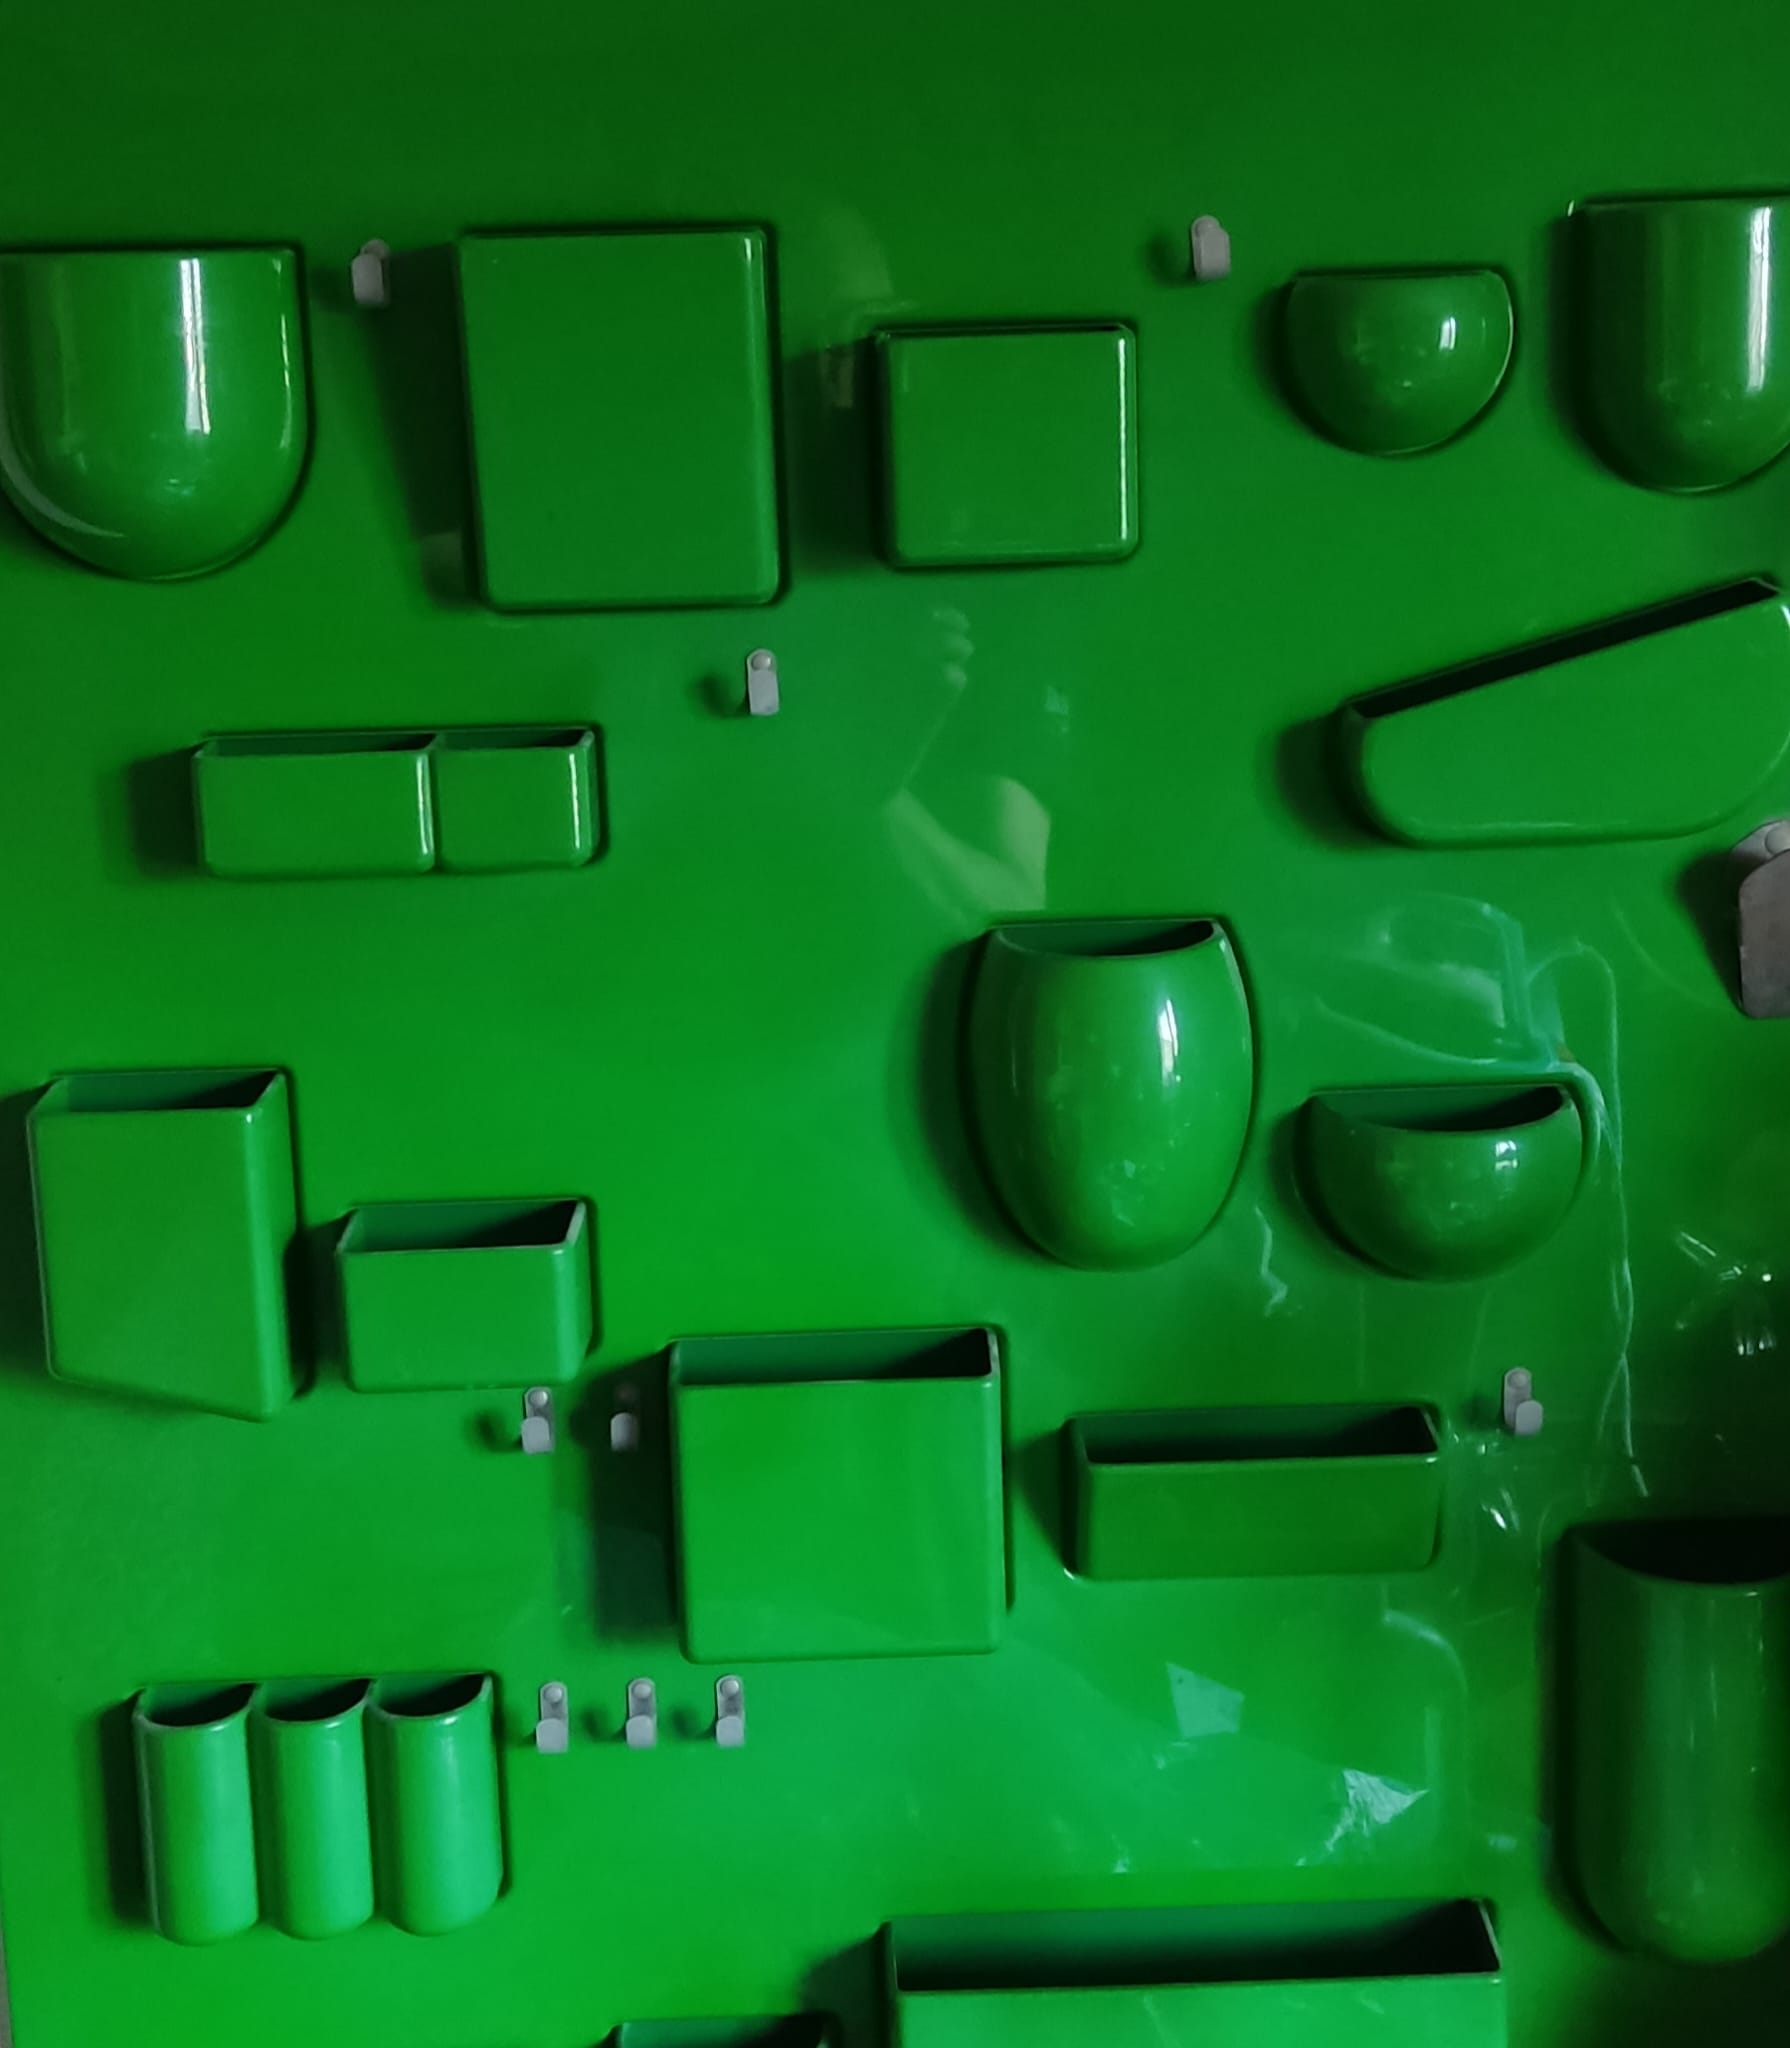 Grand-utensilo-vert-vitra-dorothé-becker-panneau-mural-rangement-vert-rare-aurore-morisse